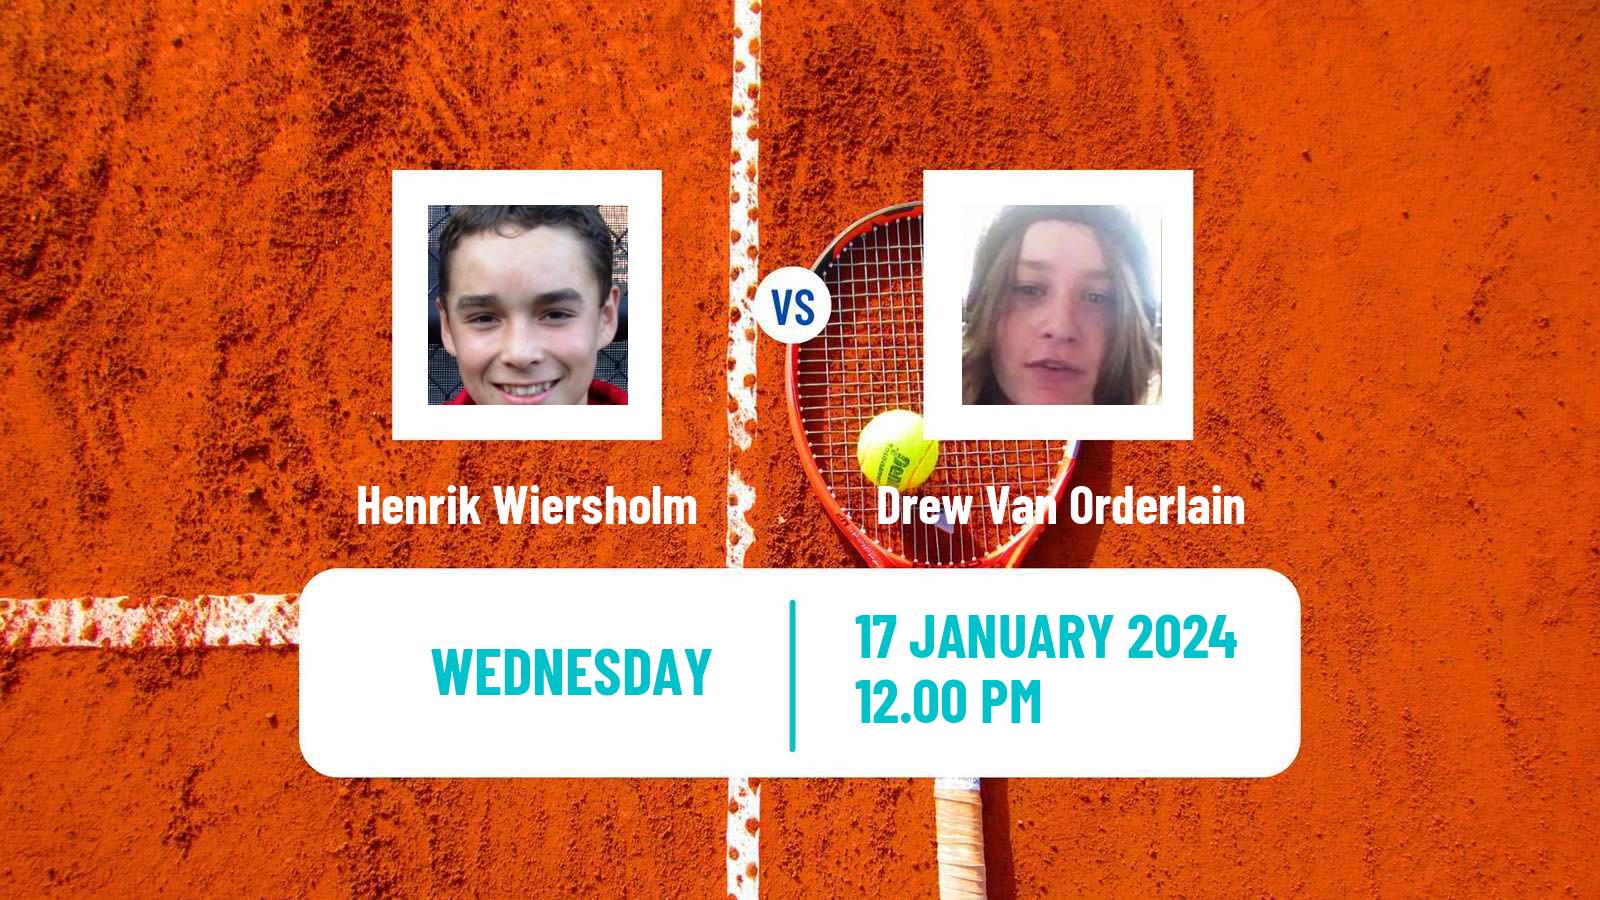 Tennis ITF M25 Ithaca Ny Men Henrik Wiersholm - Drew Van Orderlain